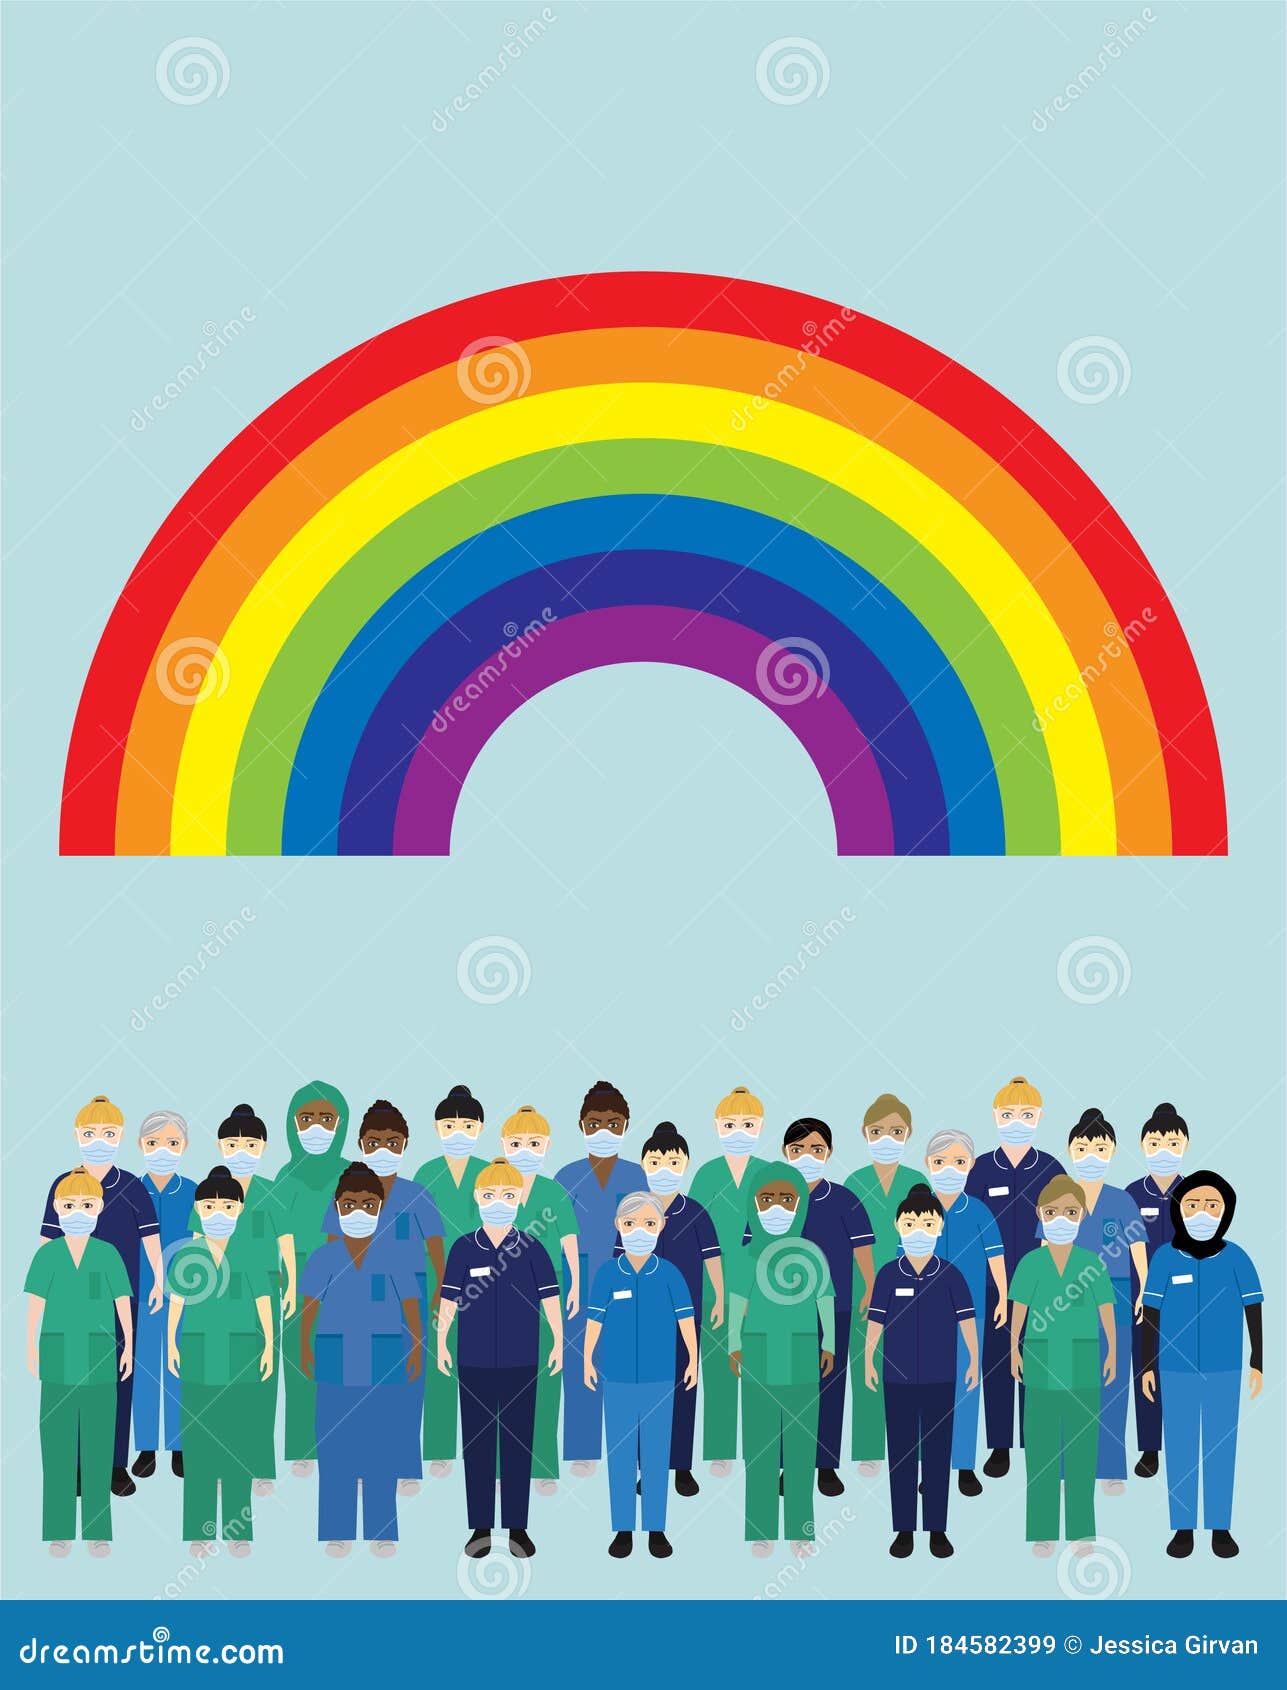 nhs hospital staff wearing face masks, standing below a rainbow